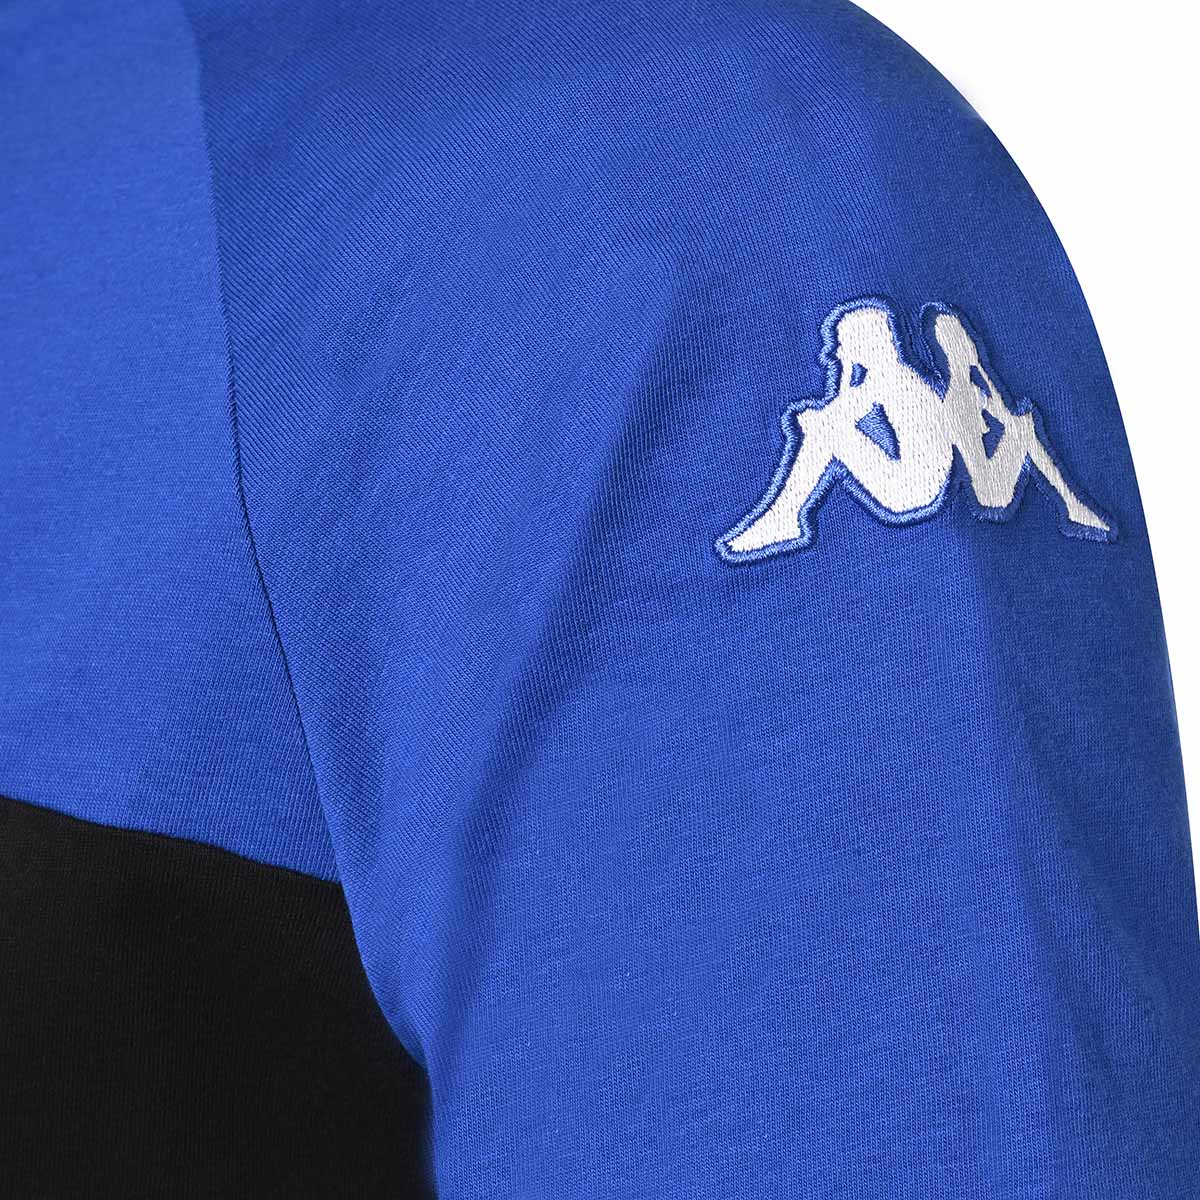 T-shirt Diago Bleu Homme